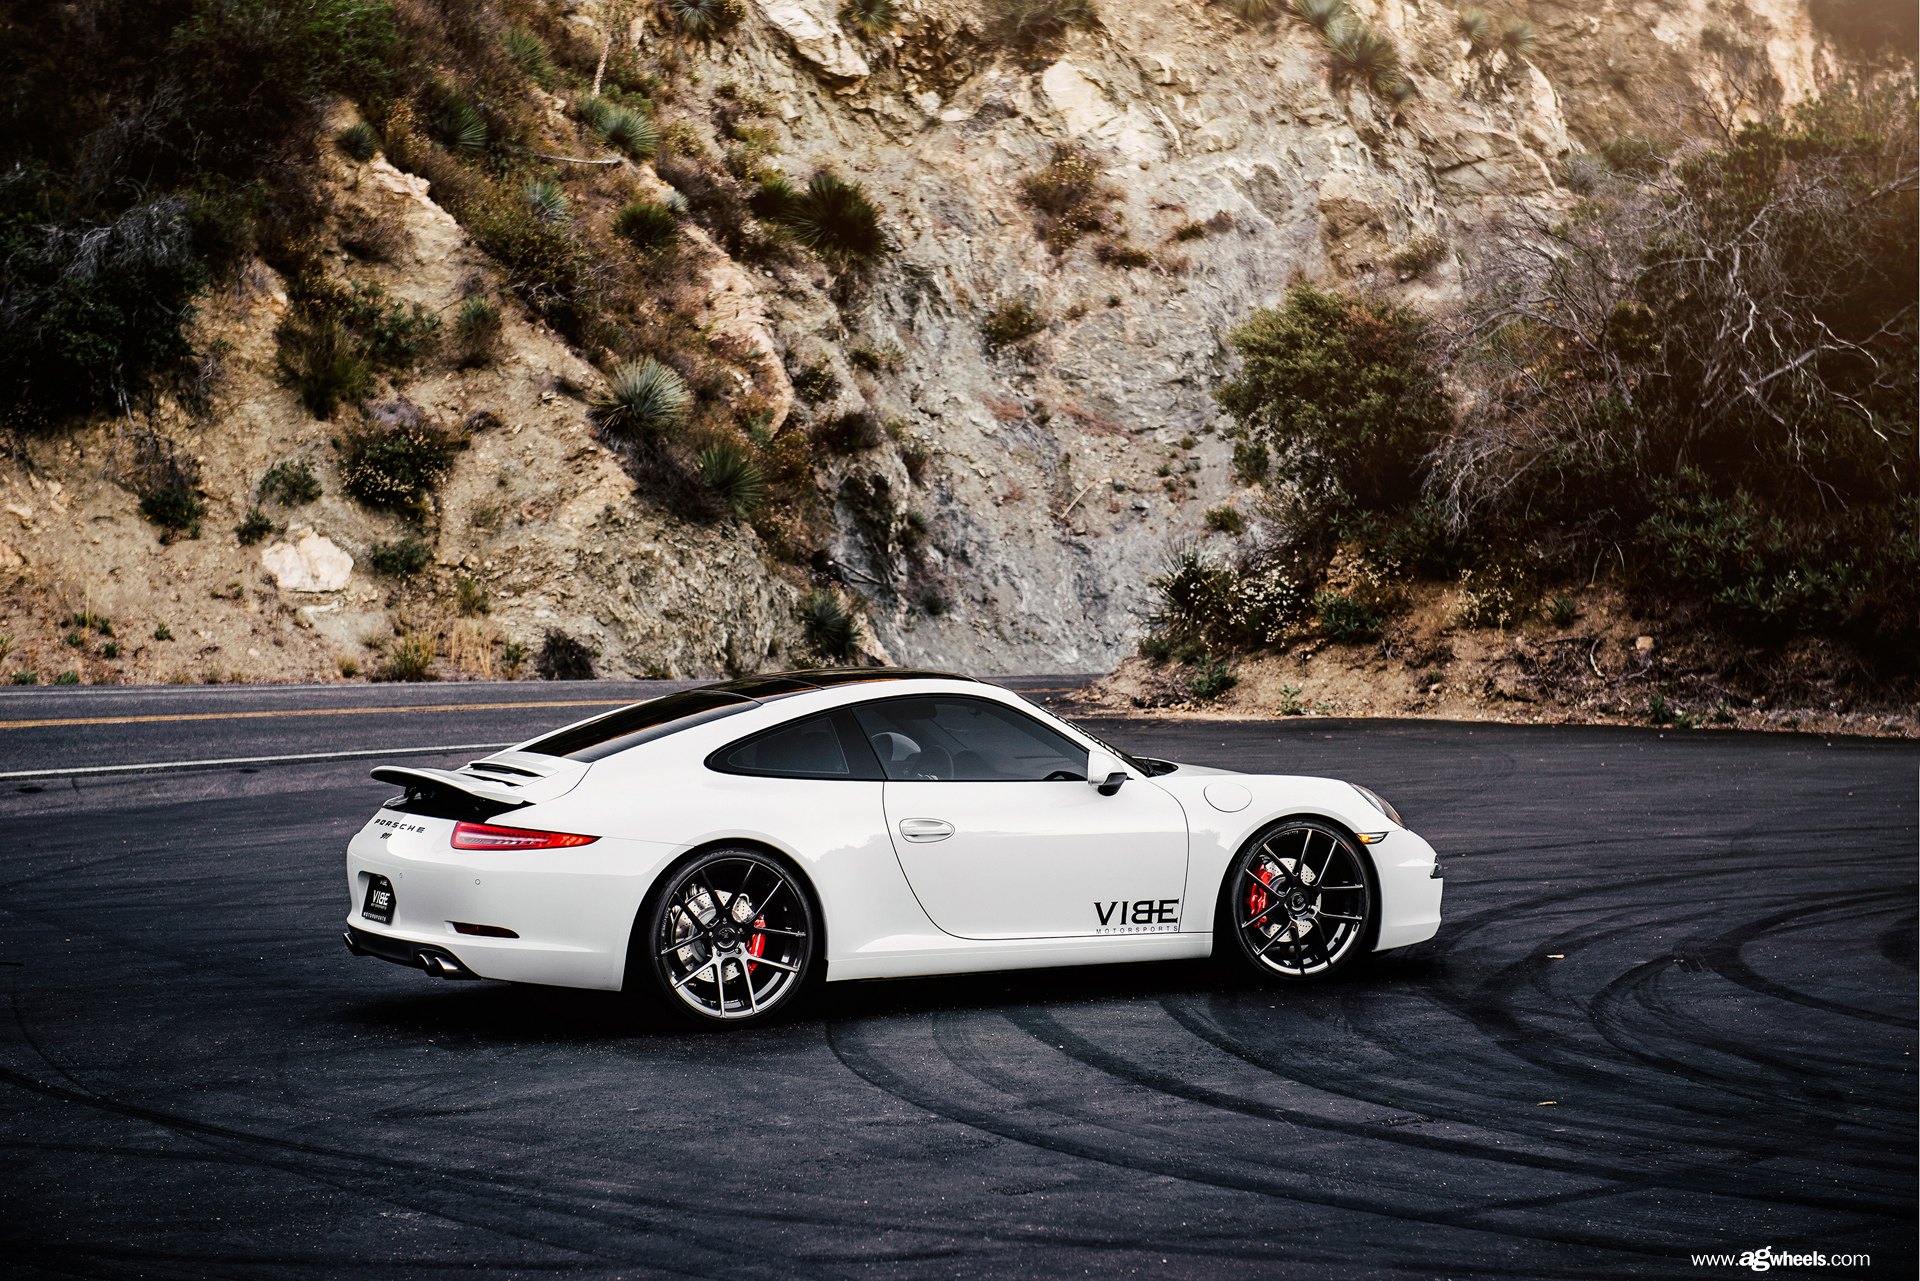 Custom Style Rear Spoiler on White Porsche 911 - Photo by Avant Garde Wheels